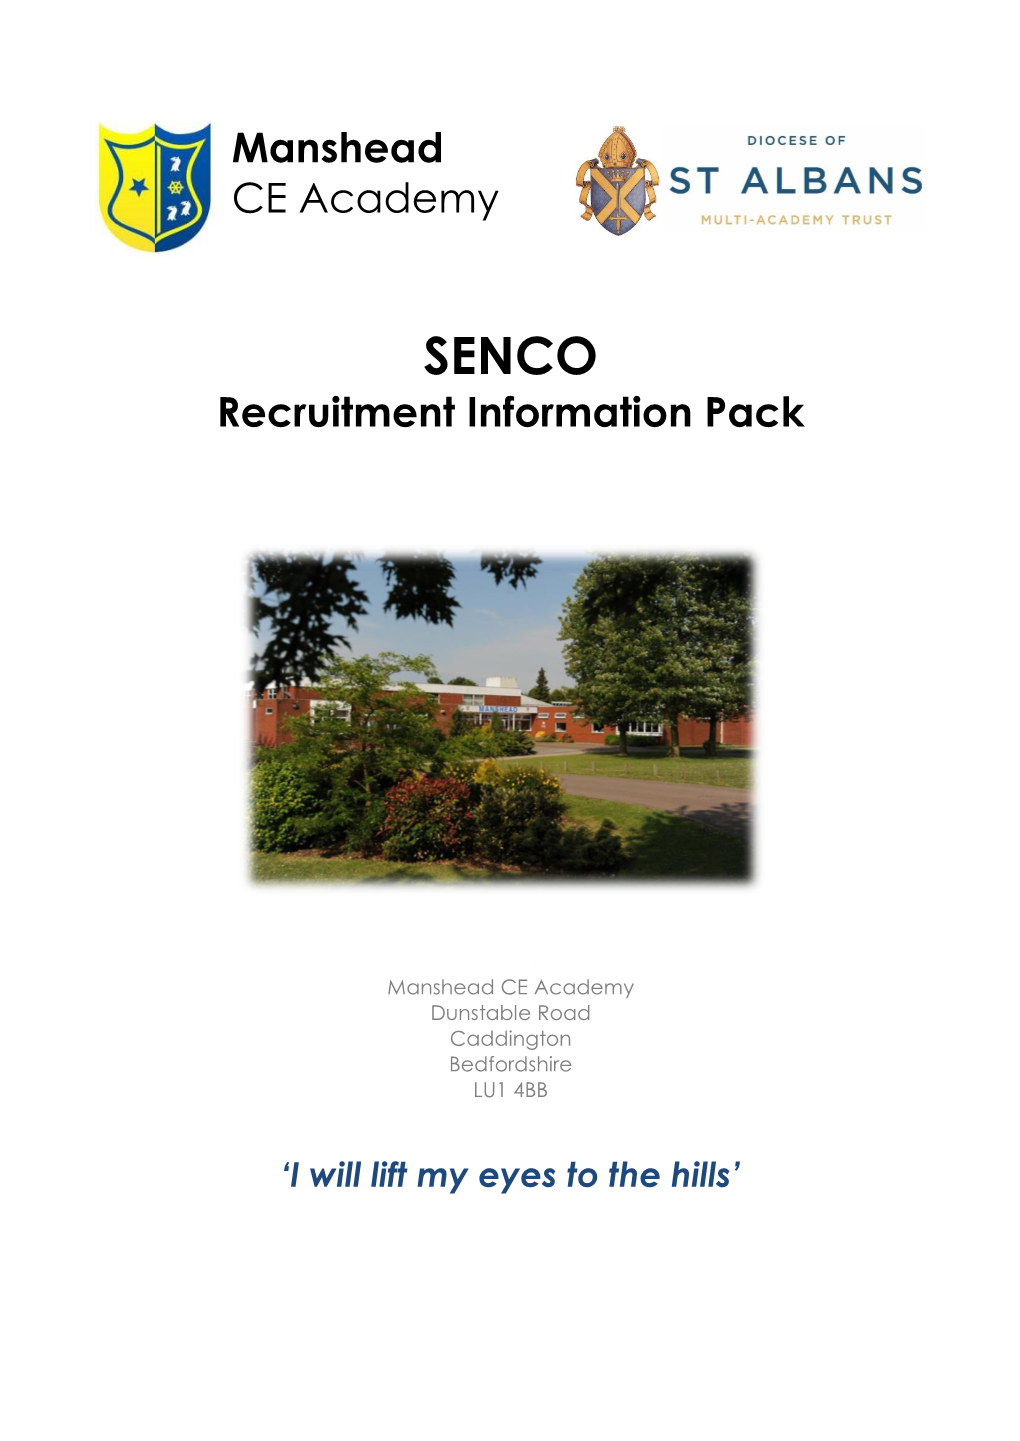 Manshead CE Academy Recruitment Information Pack